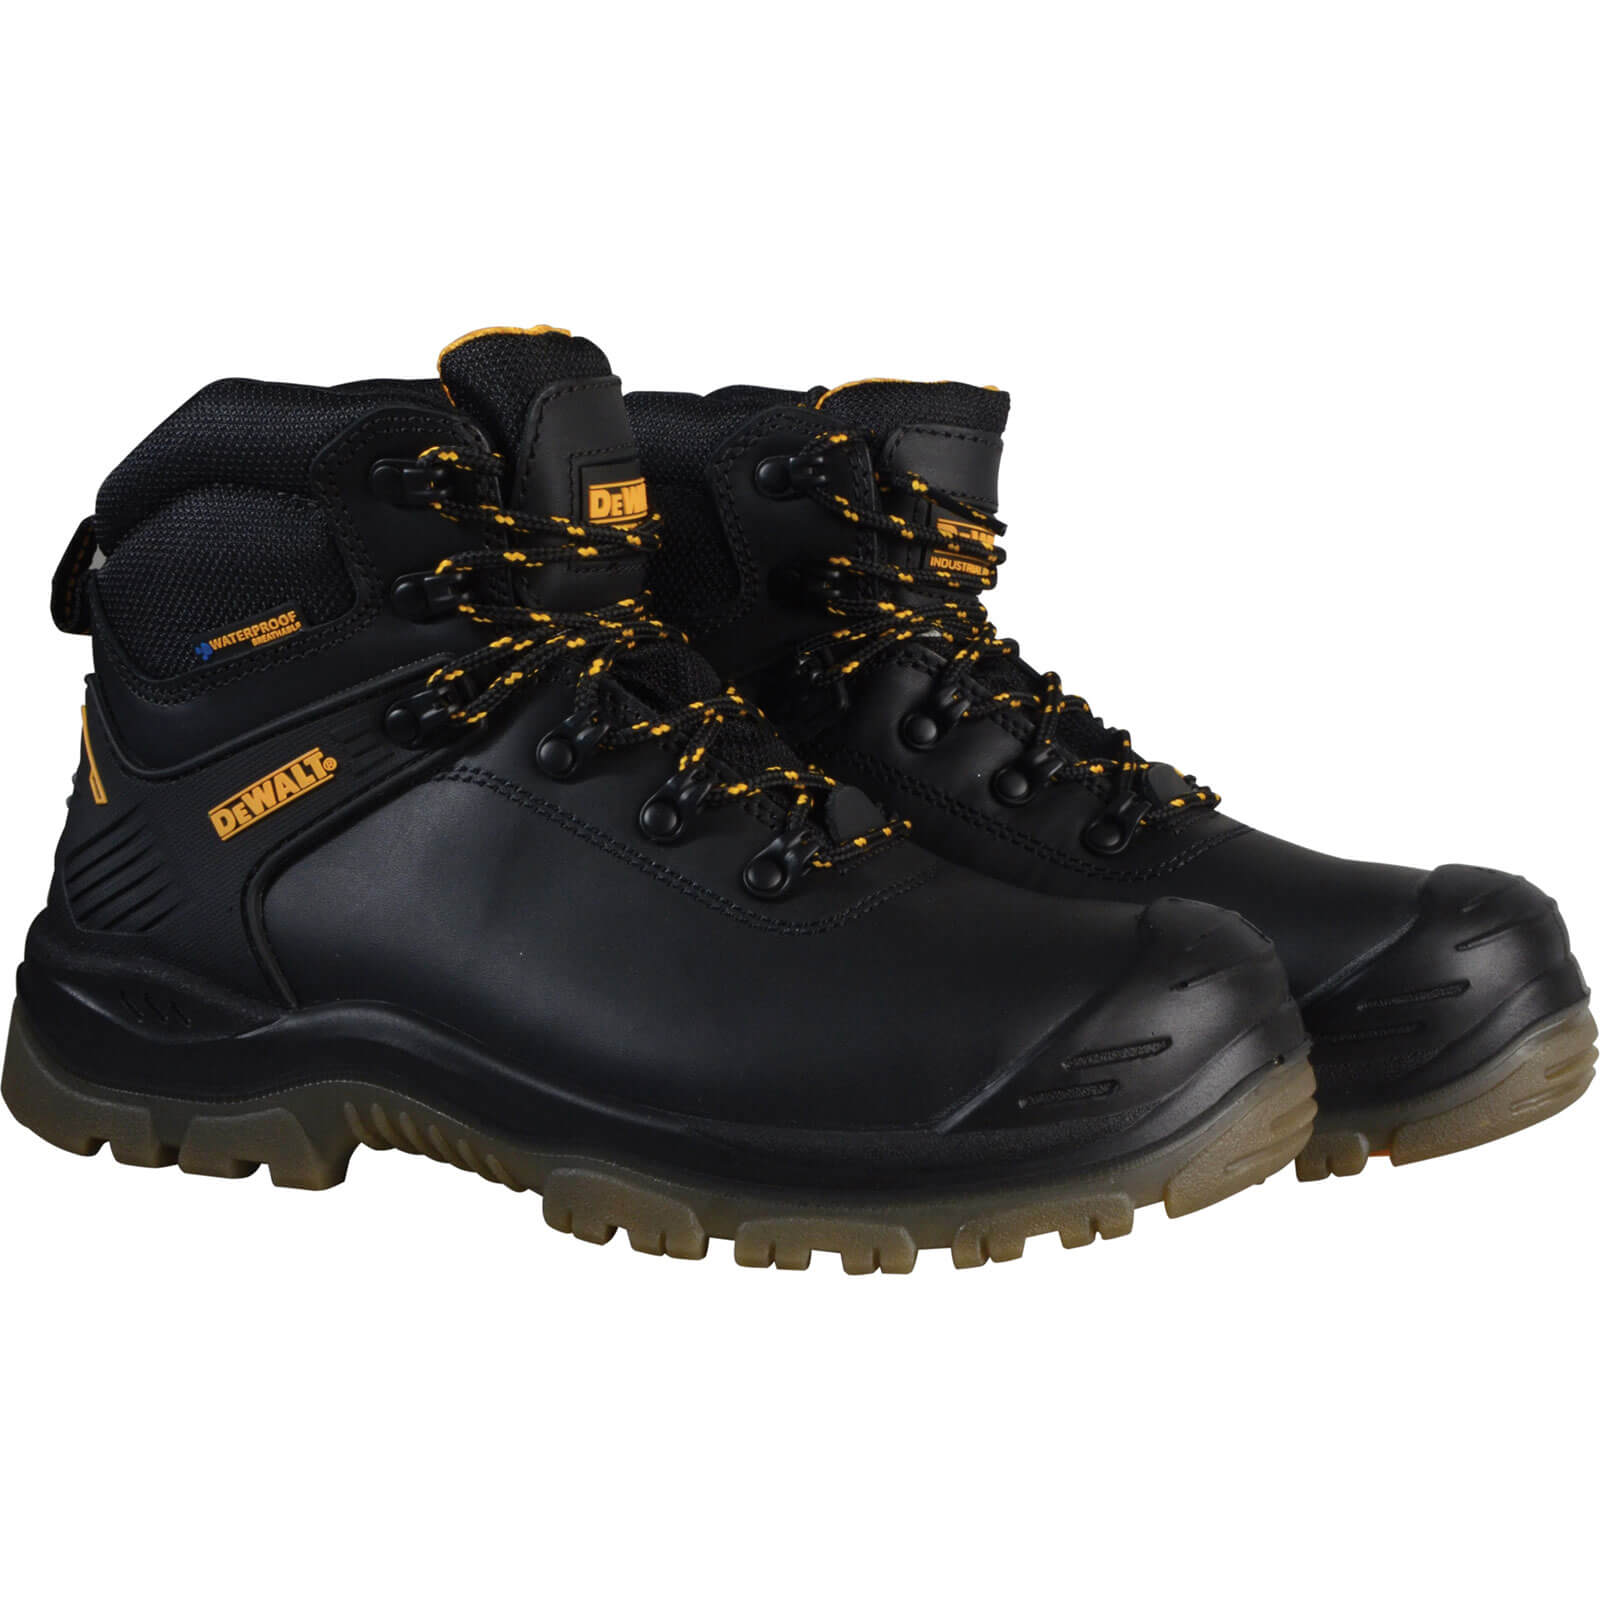 DeWalt Newark Waterproof Safety Hiker Boots Black Size 12